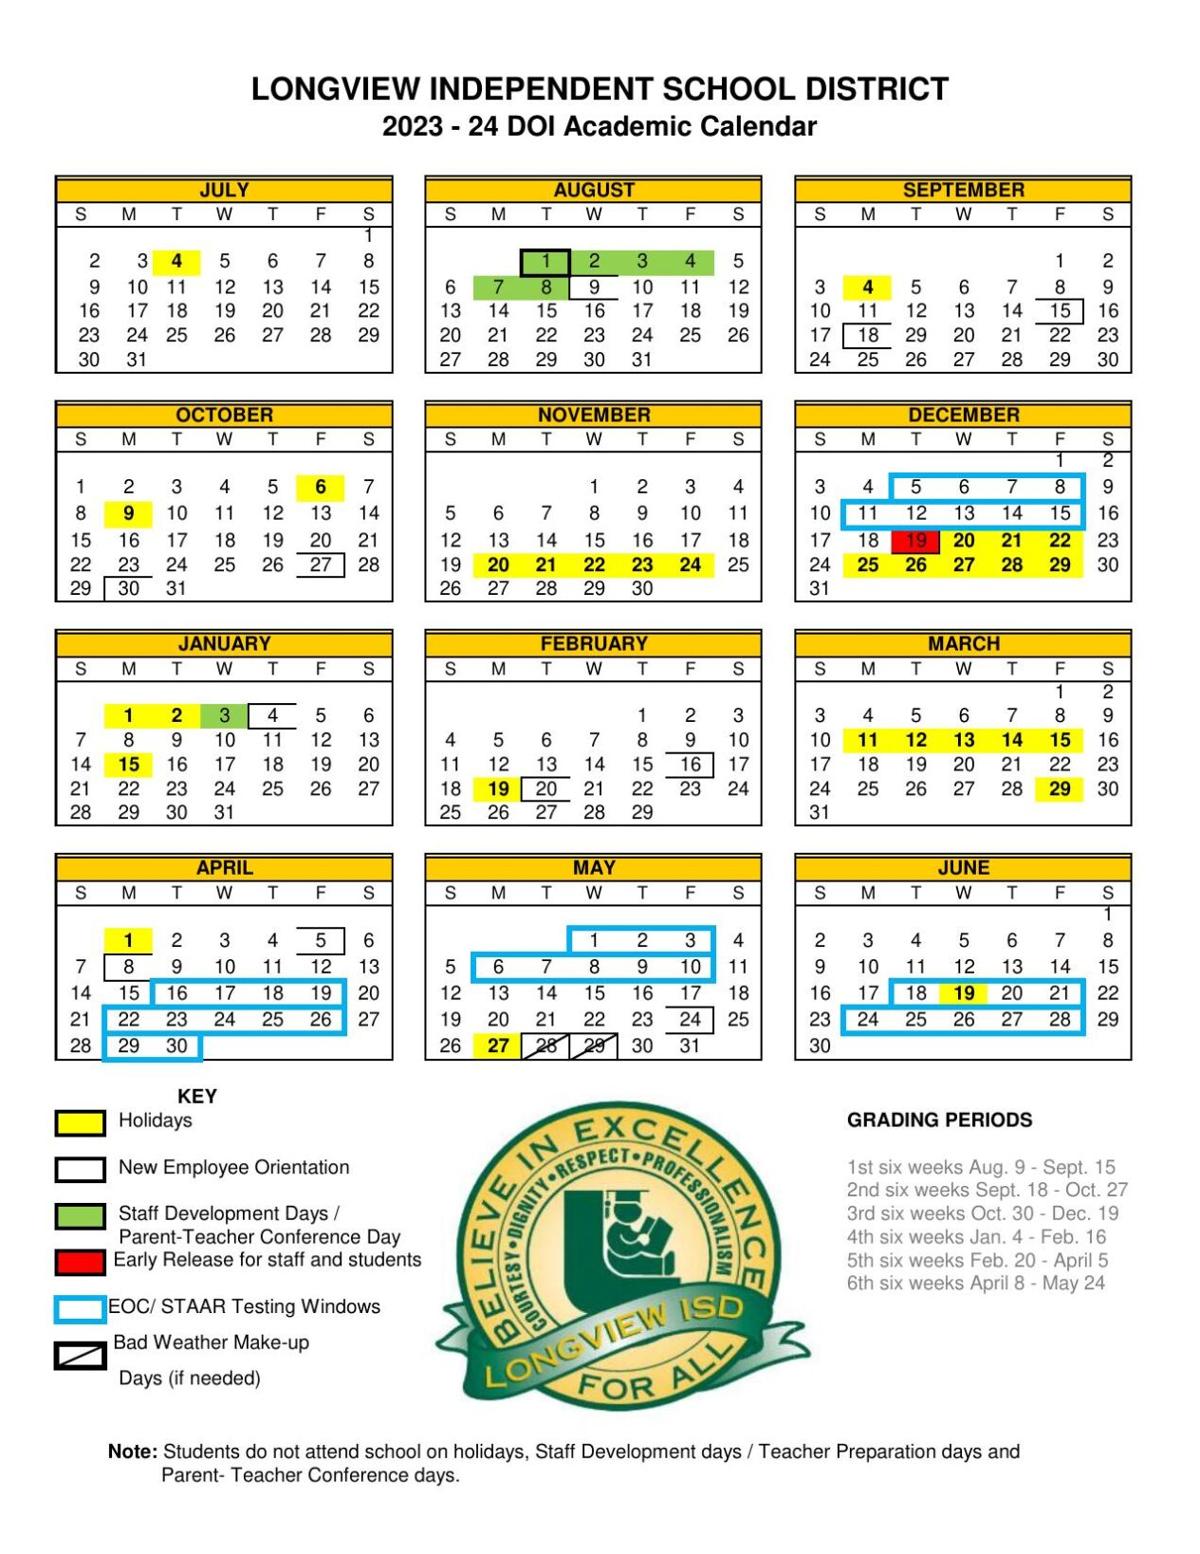 LISD approves 202324 school calendar News